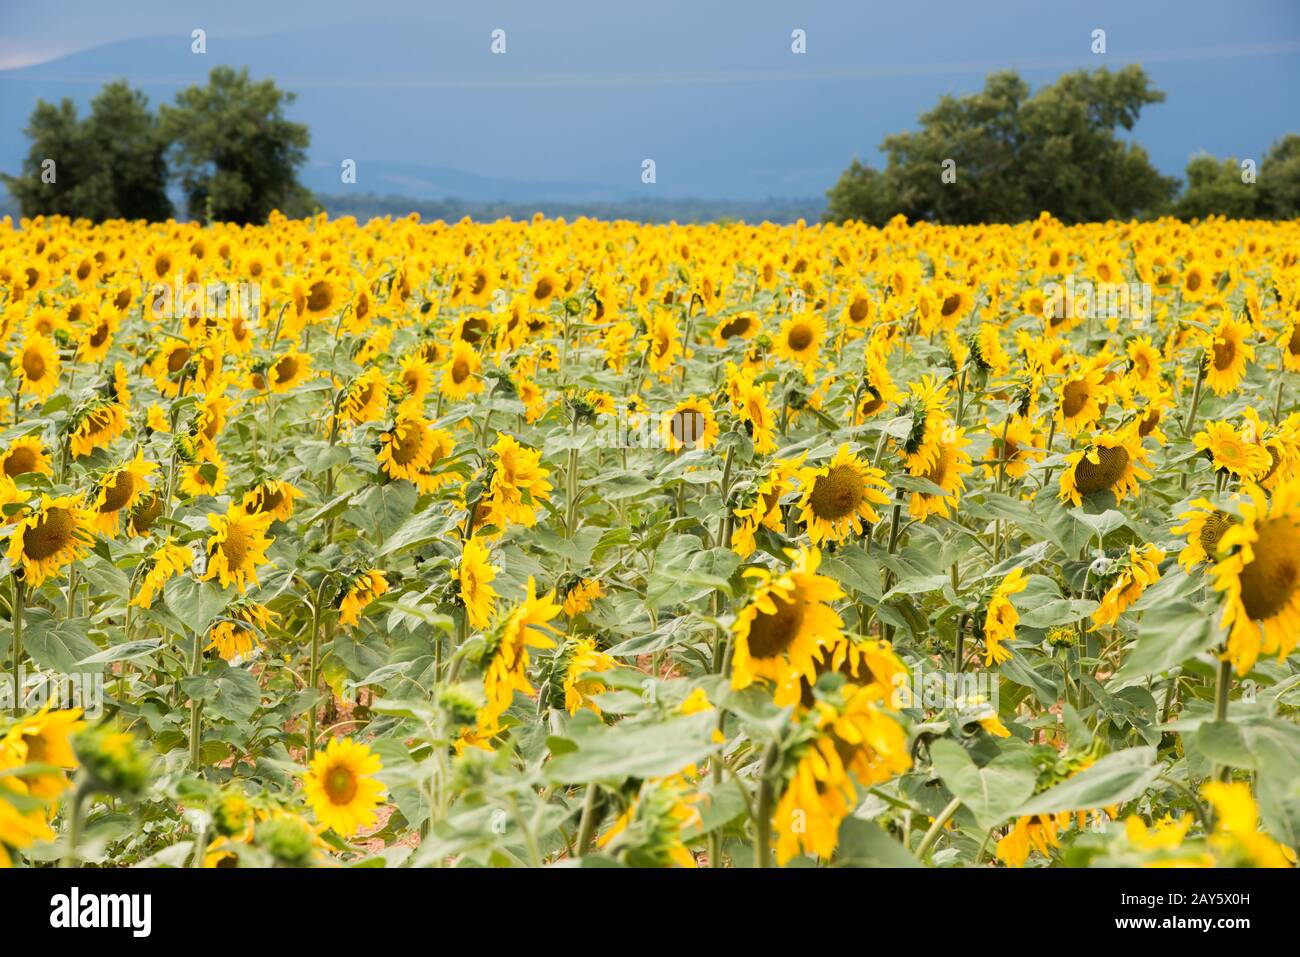 Bright yellow sunflower field on a dark blue sky background Stock Photo